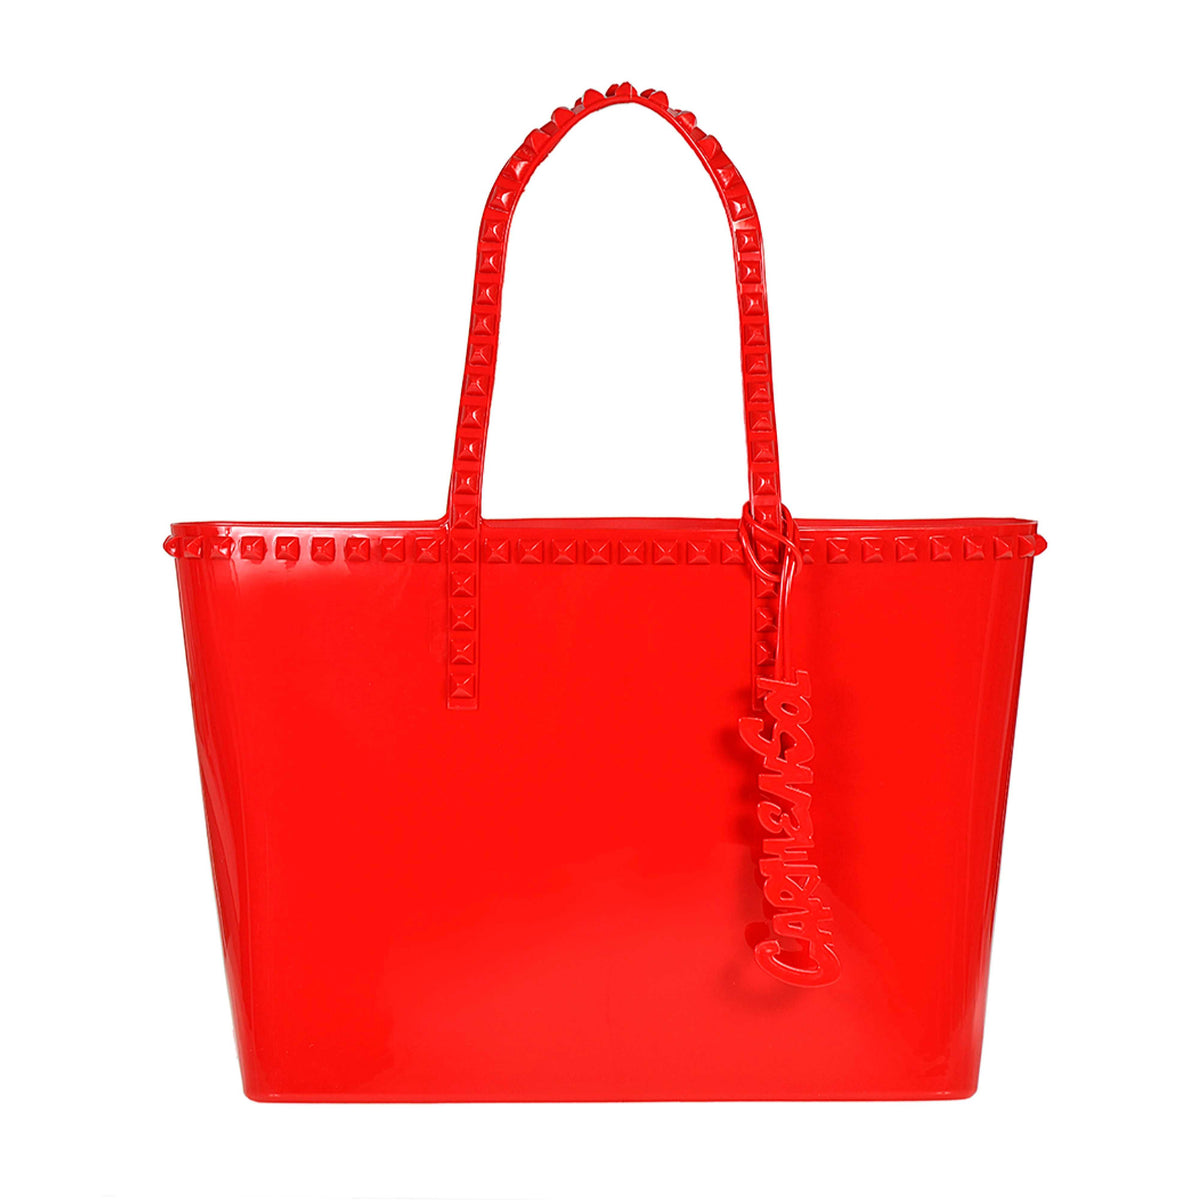 Carmen Sol Seba big purse in color red